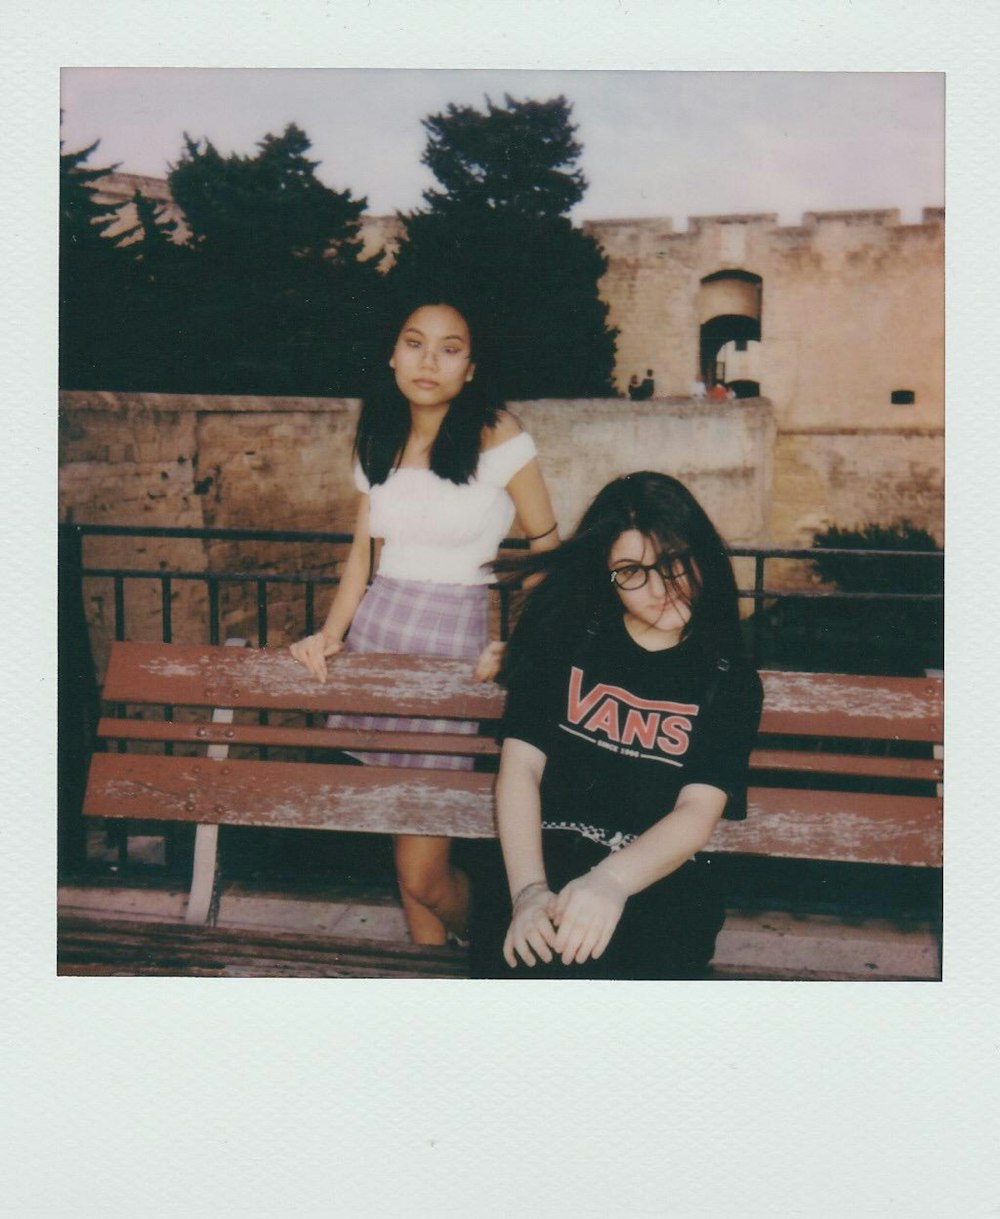 2 donne sedute sulla panchina